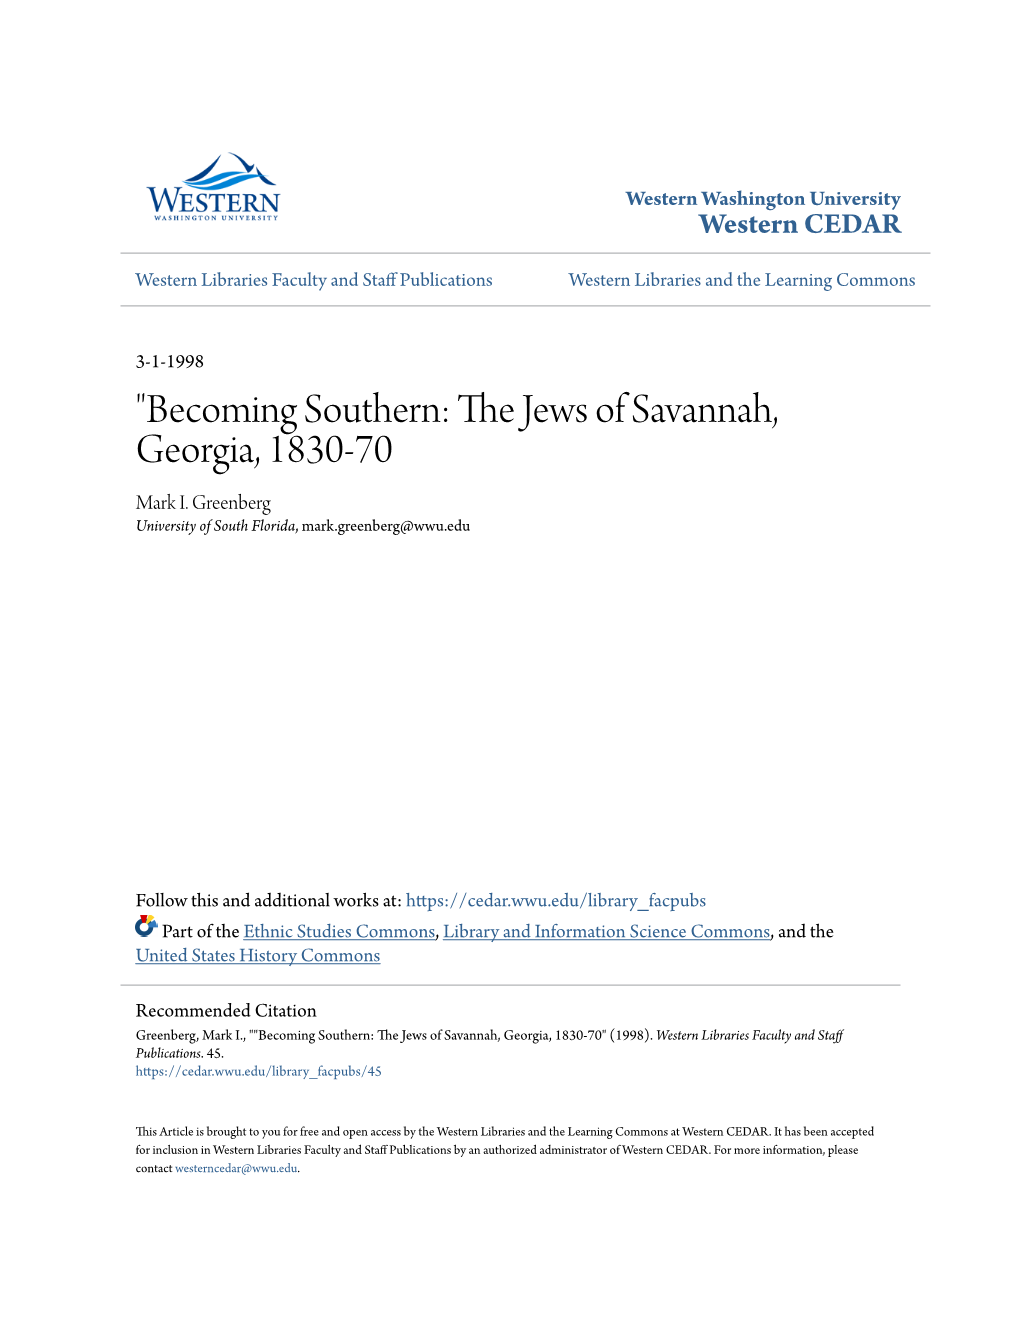 "Becoming Southern: the Jews of Savannah, Georgia, 1830-70